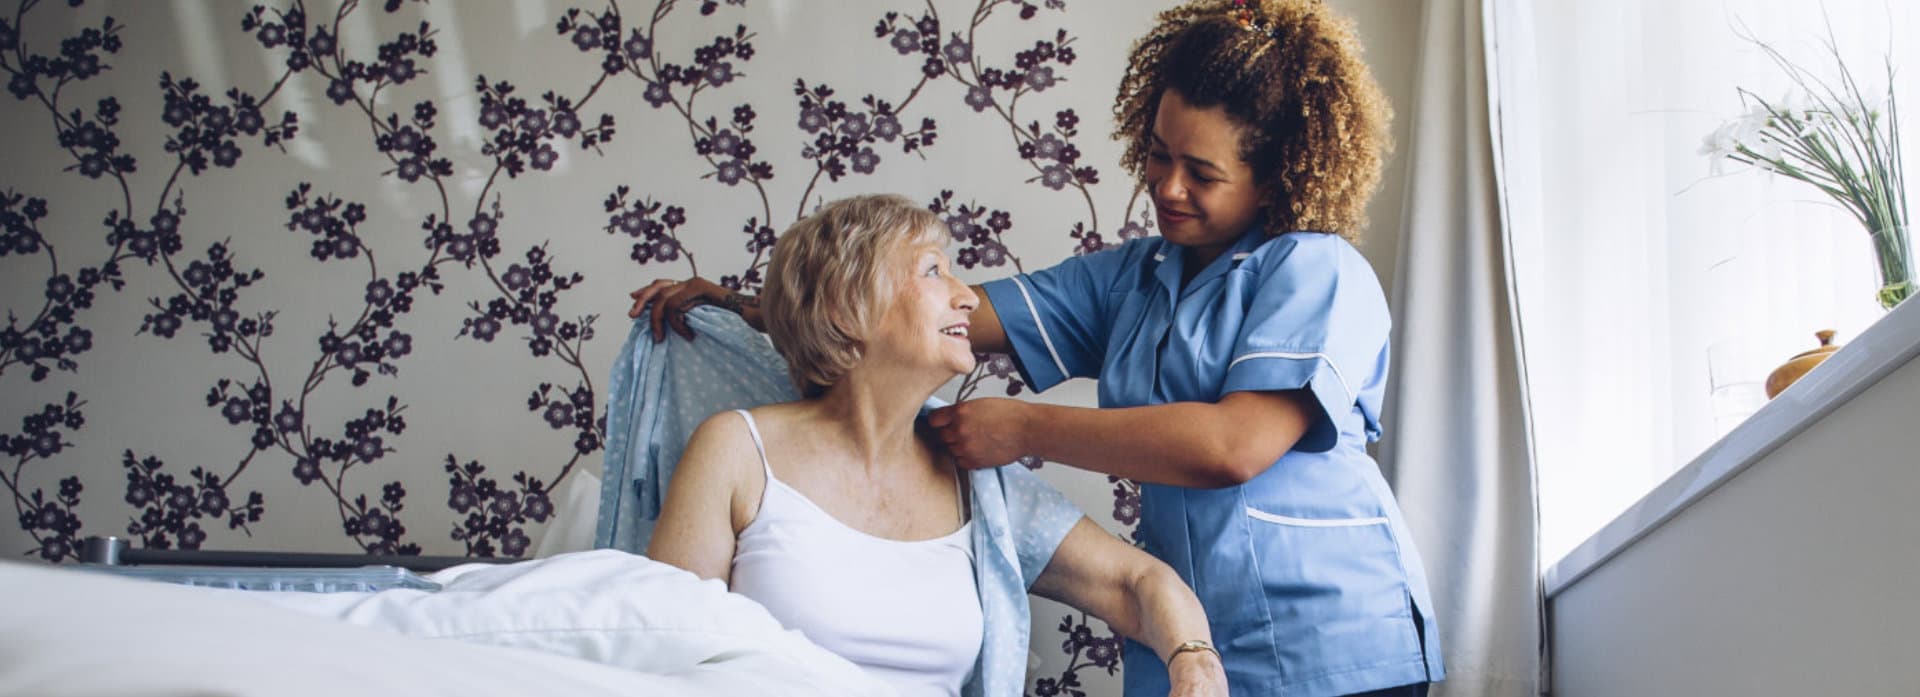 female caregiver assisting senior woman